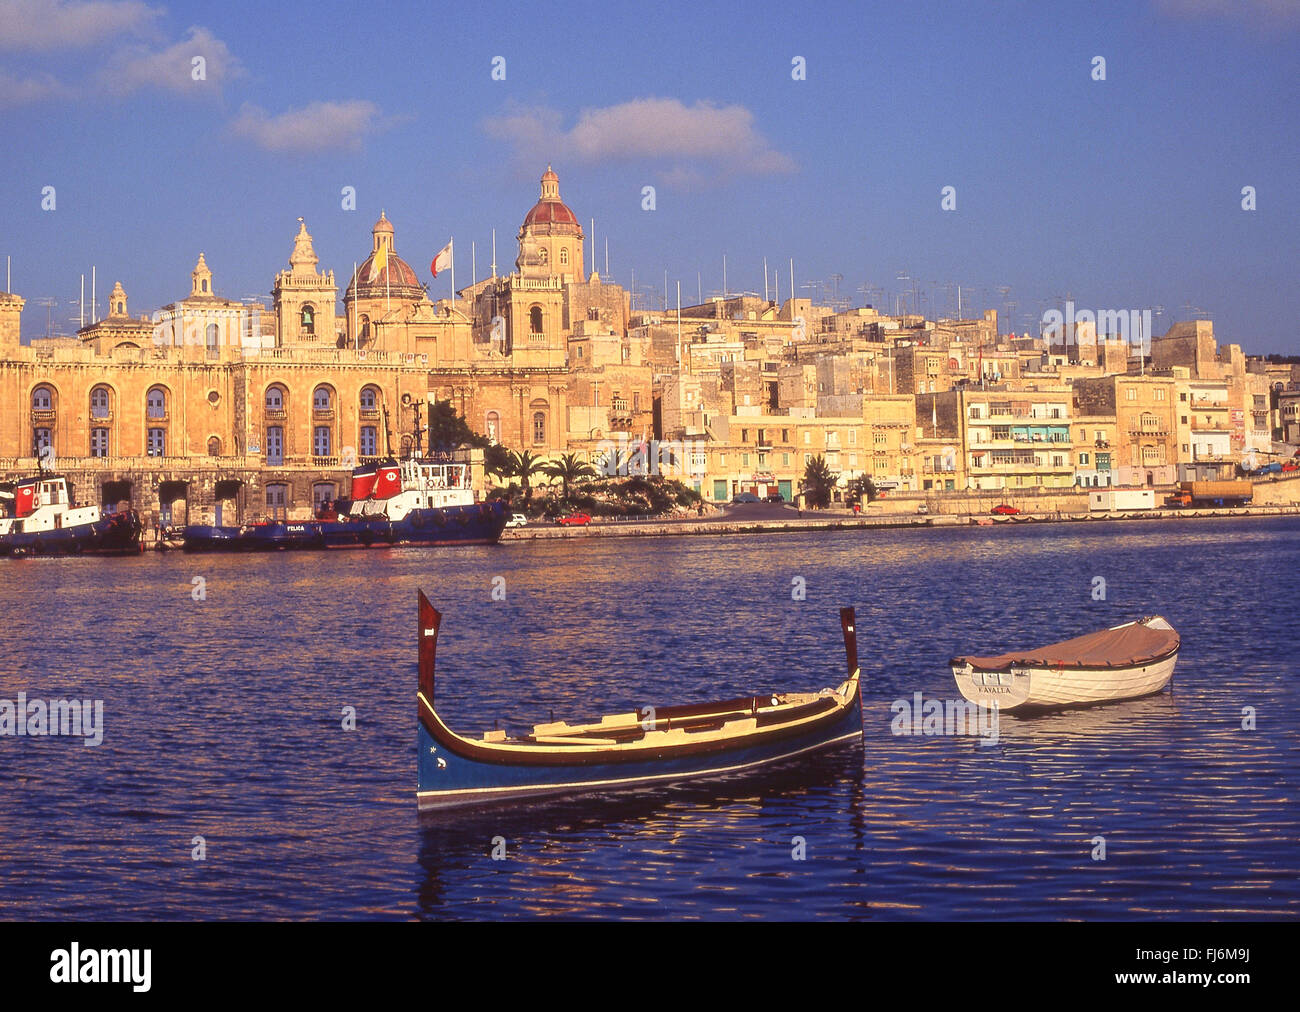 Luzzu boat in harbour, Valletta (Il-Belt Valletta), Southern Harbour District, Malta Xlokk Region, Republic of Malta Stock Photo